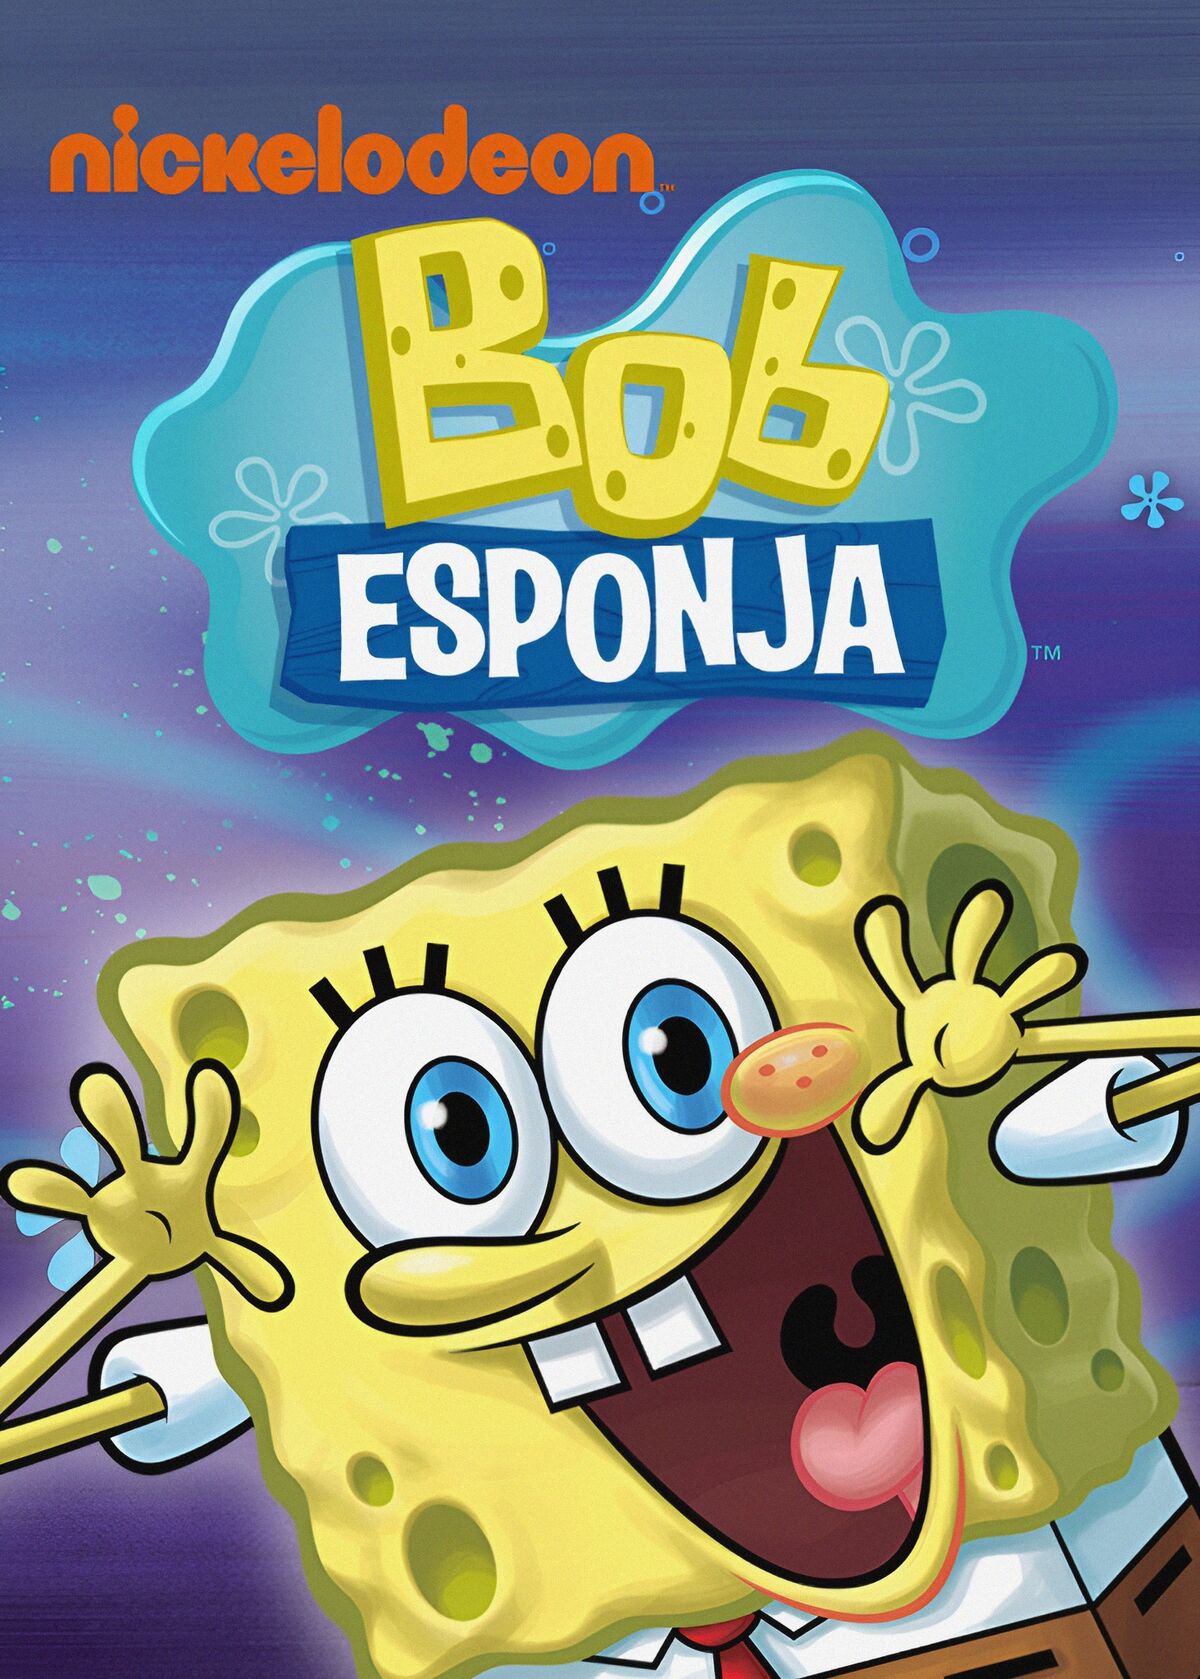 Bob Esponja: la verdadera inspiración detrás del famoso personaje de  Nickelodeon, Series TV, NickToons nnda nnlt, FAMA